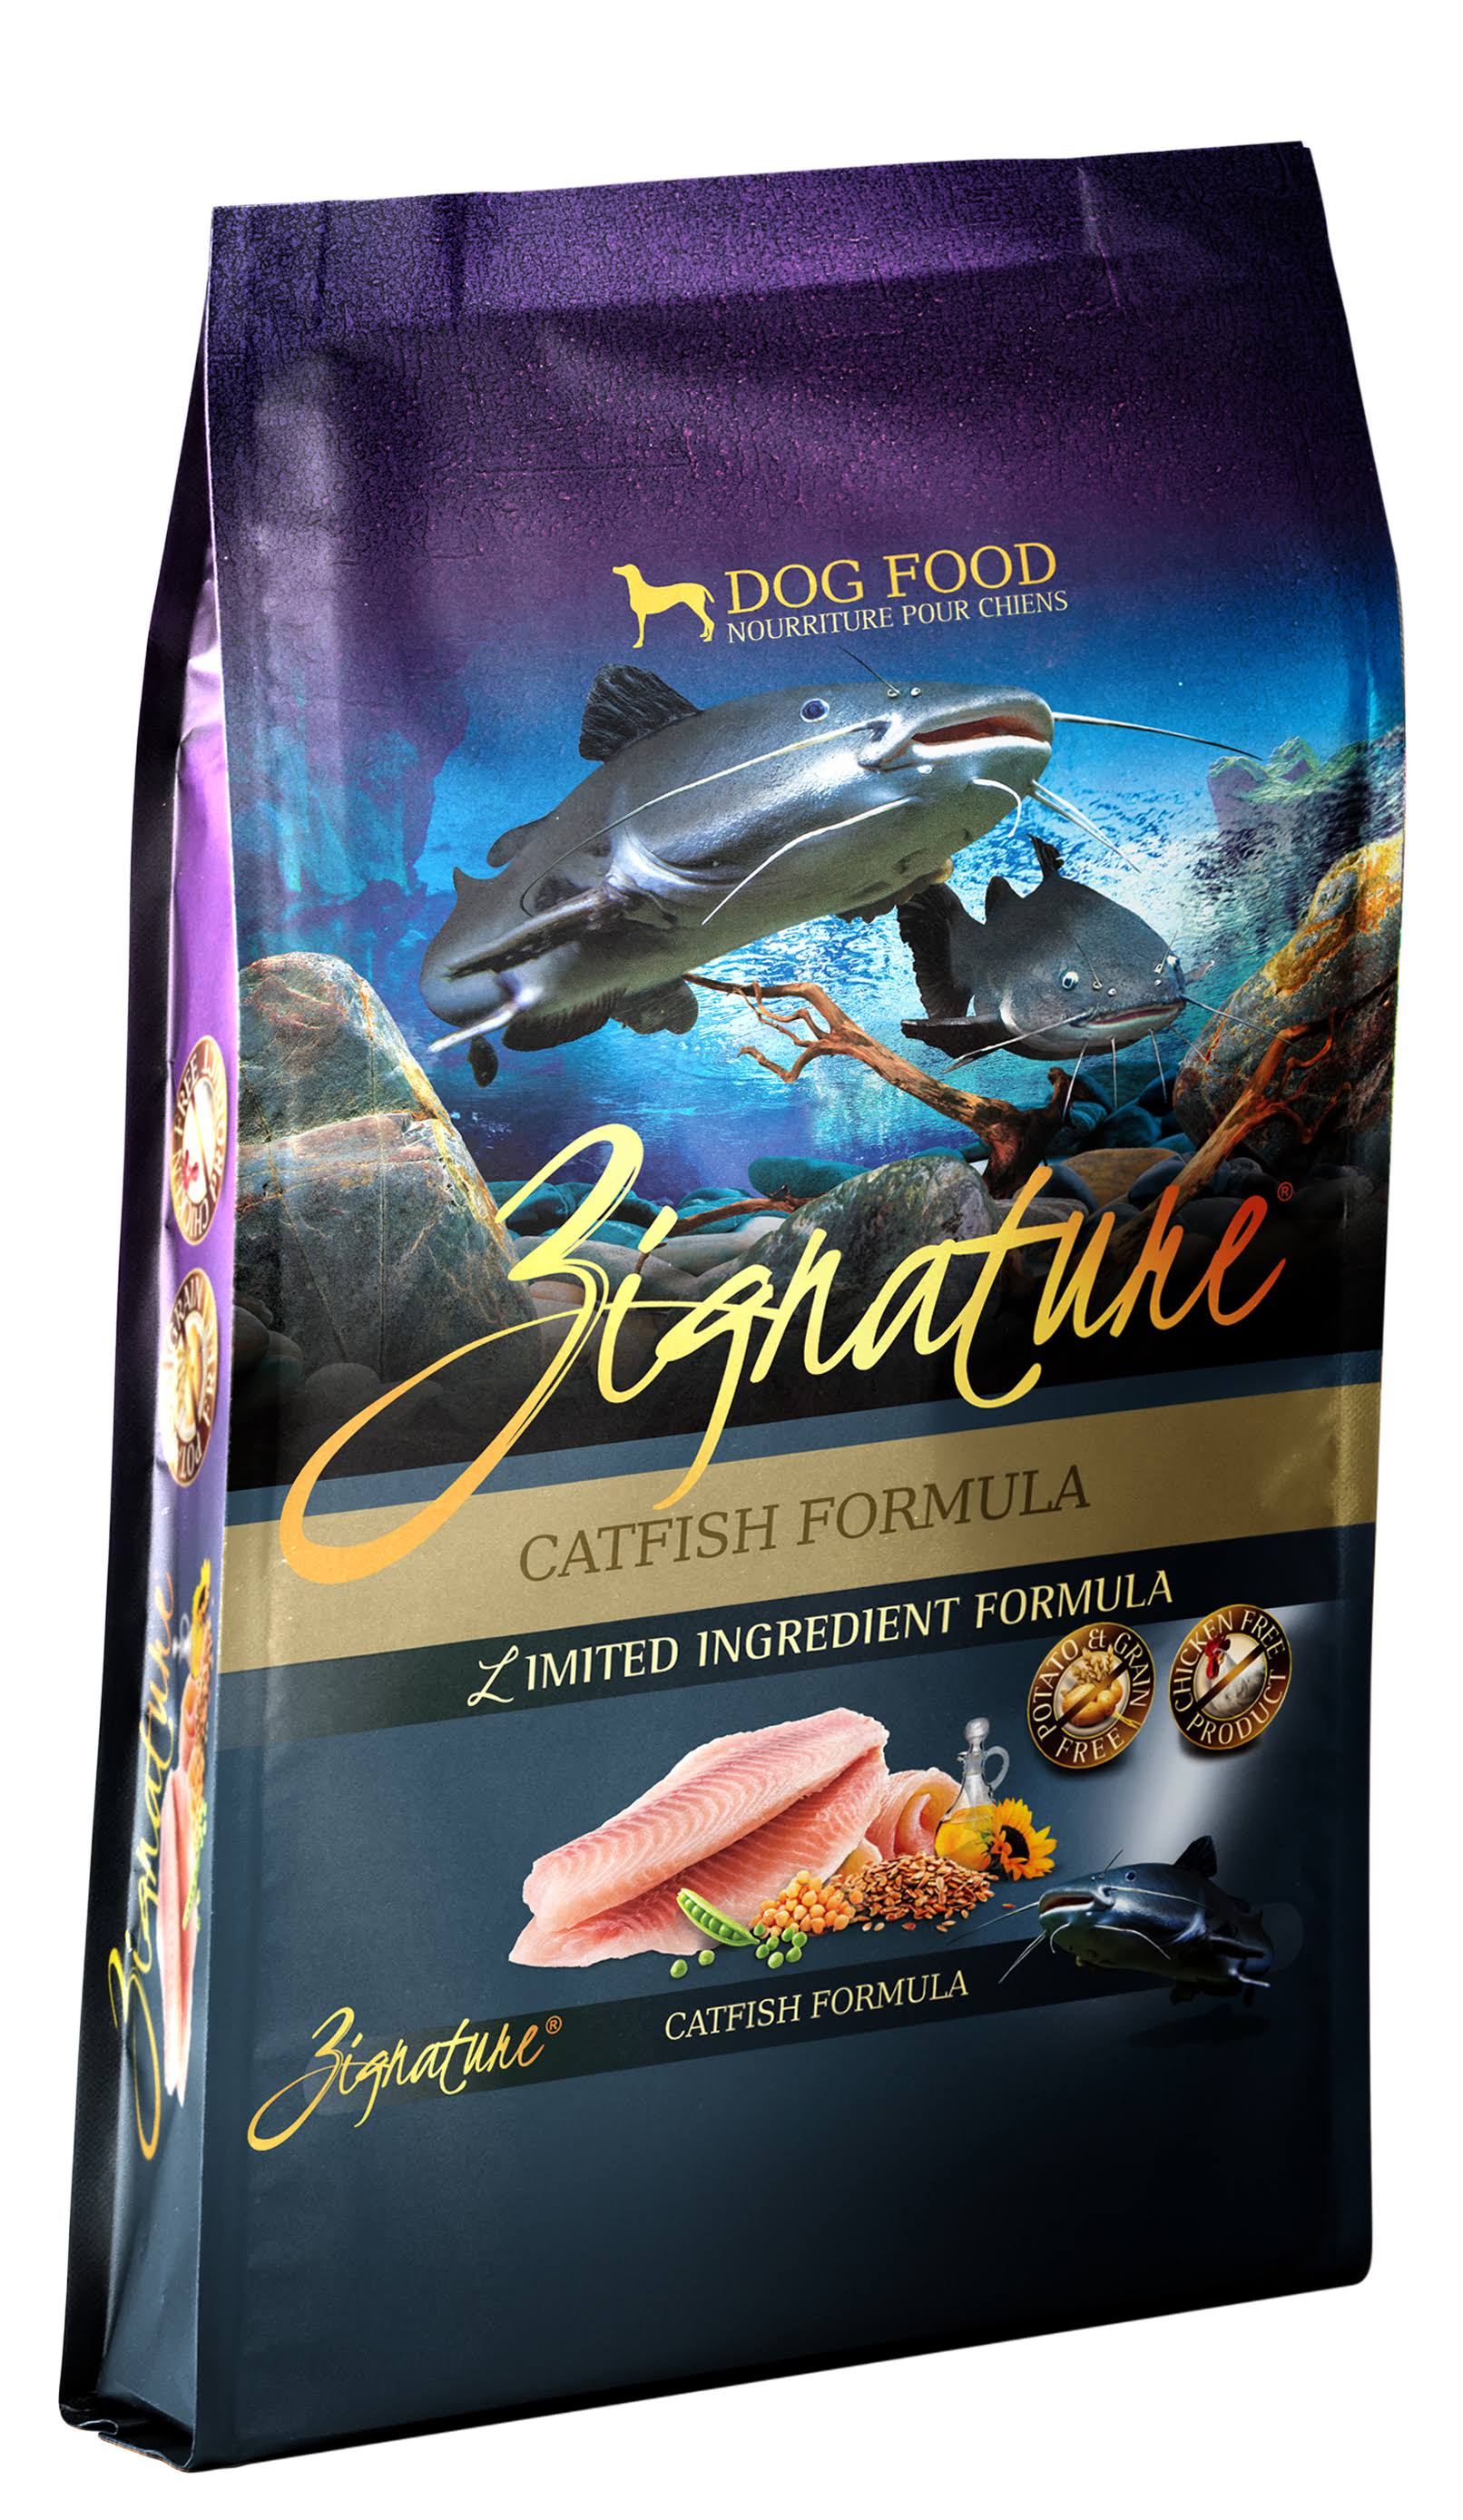 Zignature Catfish Limited Ingredient Formula Grain-Free Dry Dog Food - 13.5lb